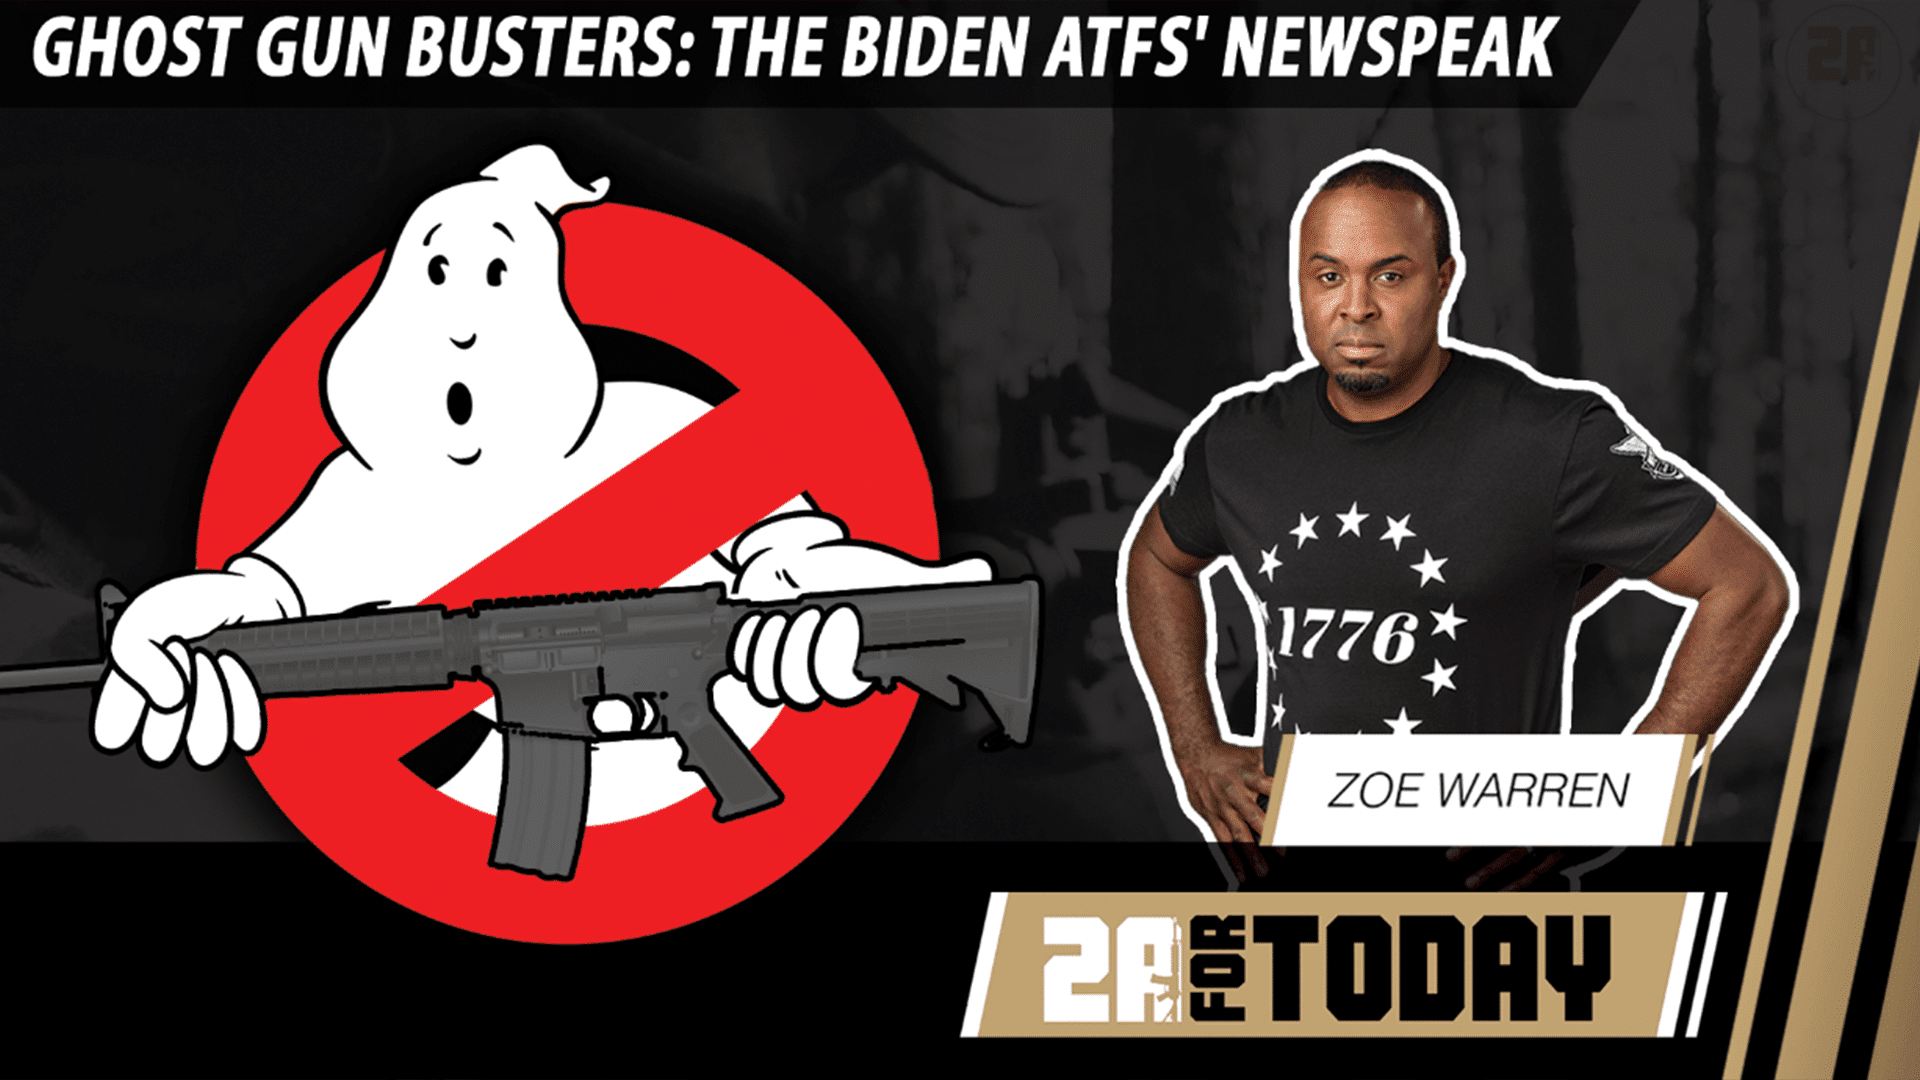 Ghost Gun Busters: The Biden ATFs' Newspeak - 2A For Today!